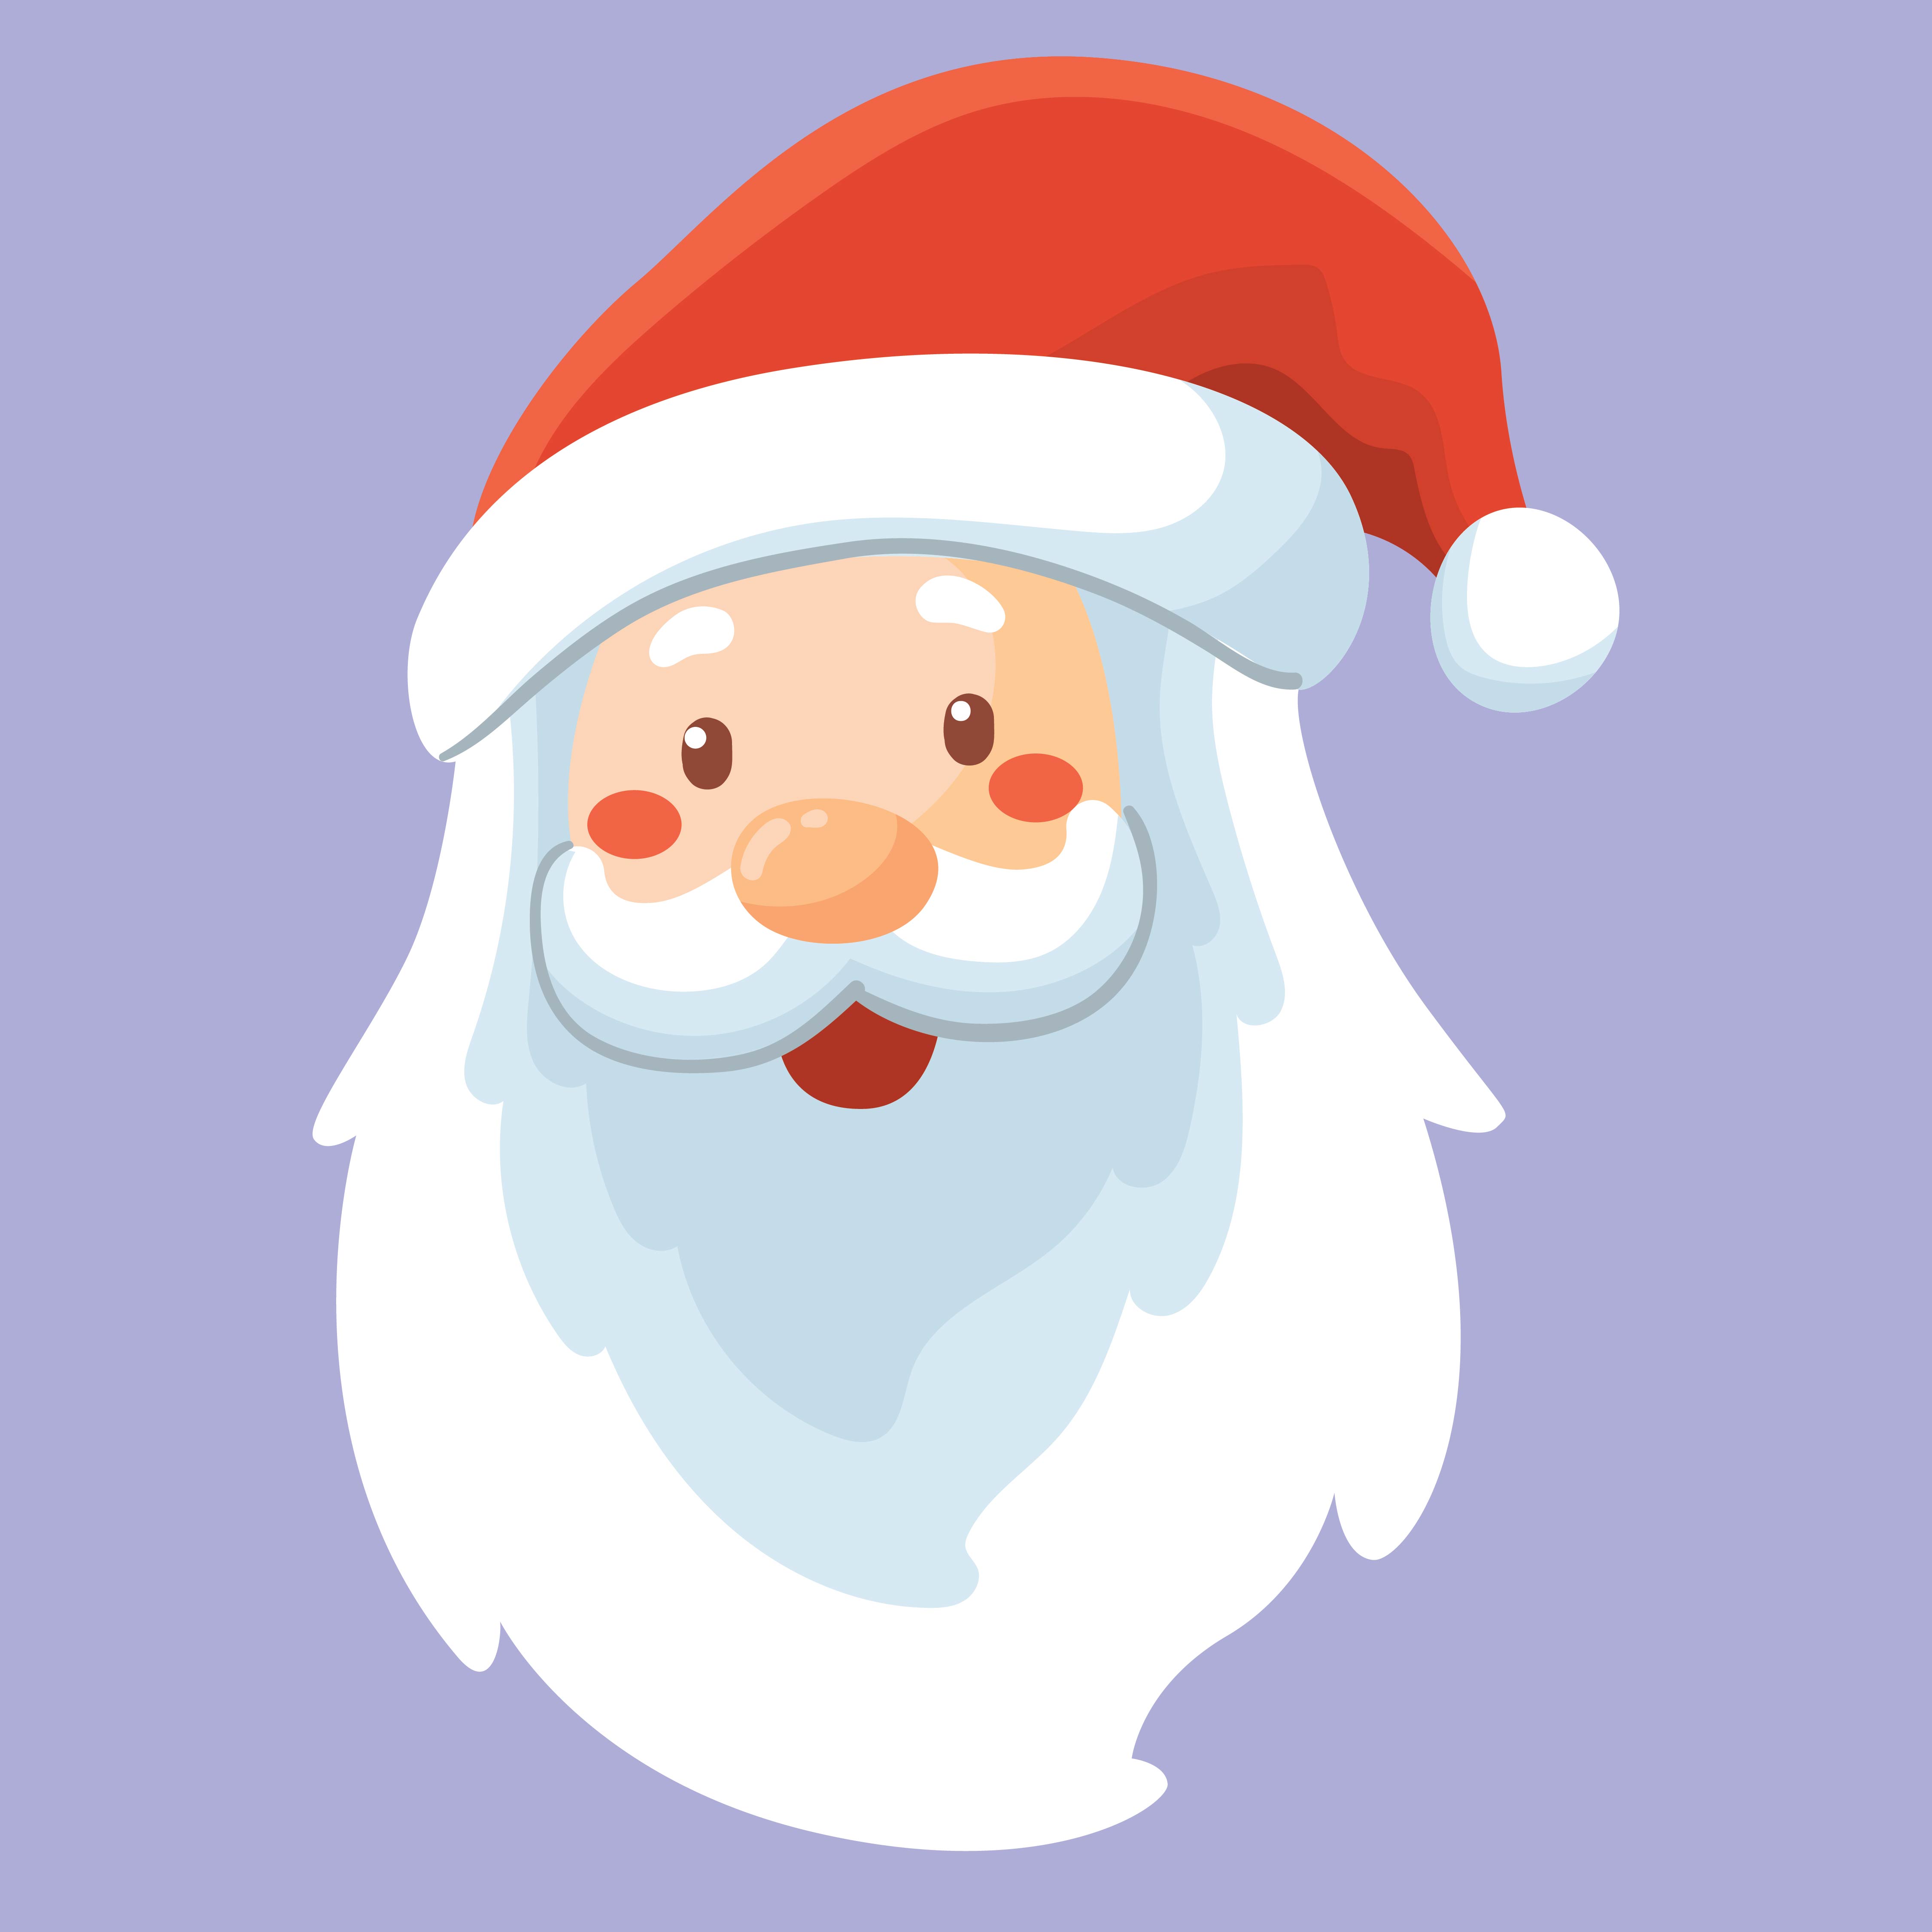 7 Best Images of Santa Claus Face Template Printable Santa Face